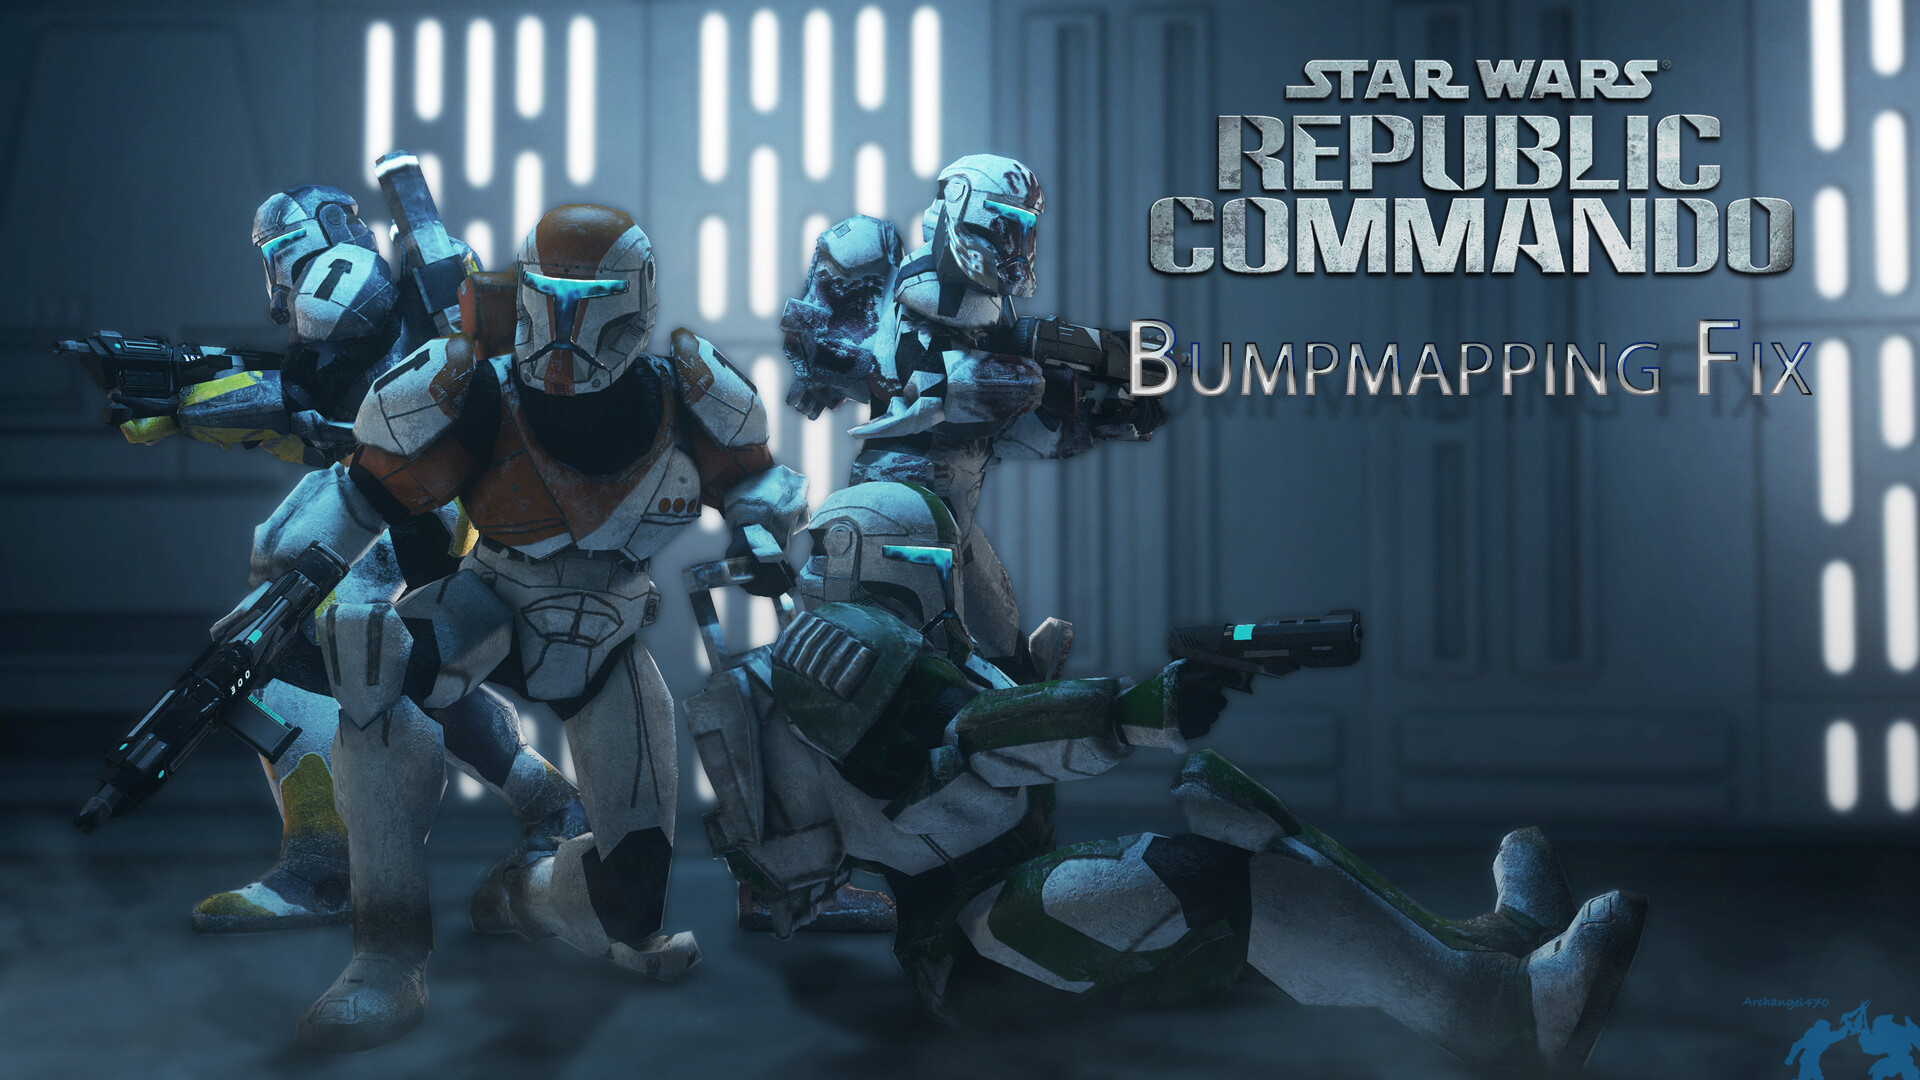 Star Wars: Republic Commando "Bumpmapping Fix"